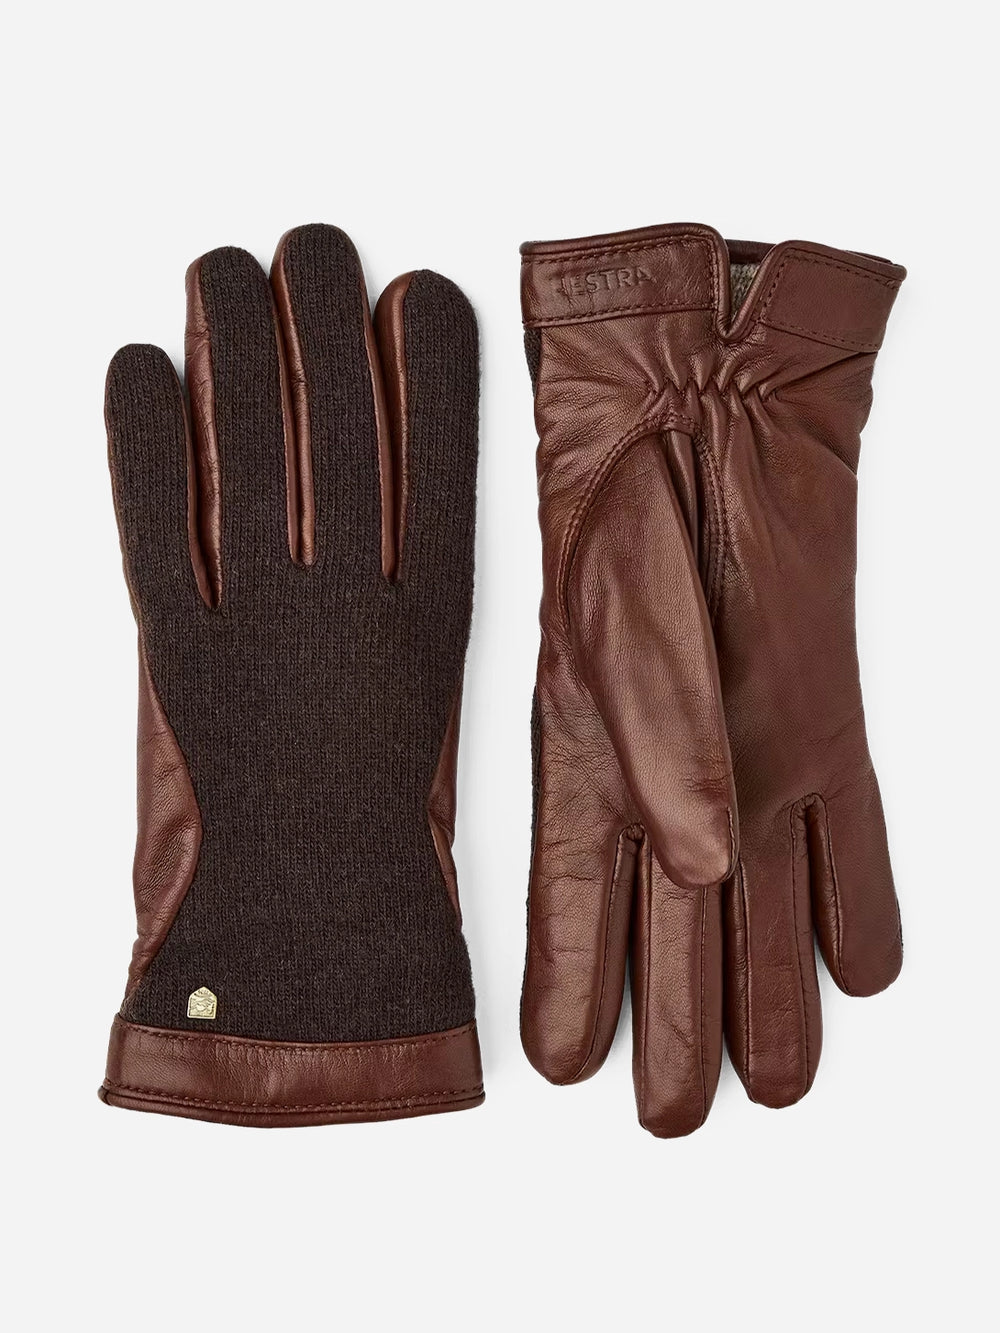 Espresso/Chestnut Saga Hestra Fashion Winter Gloves